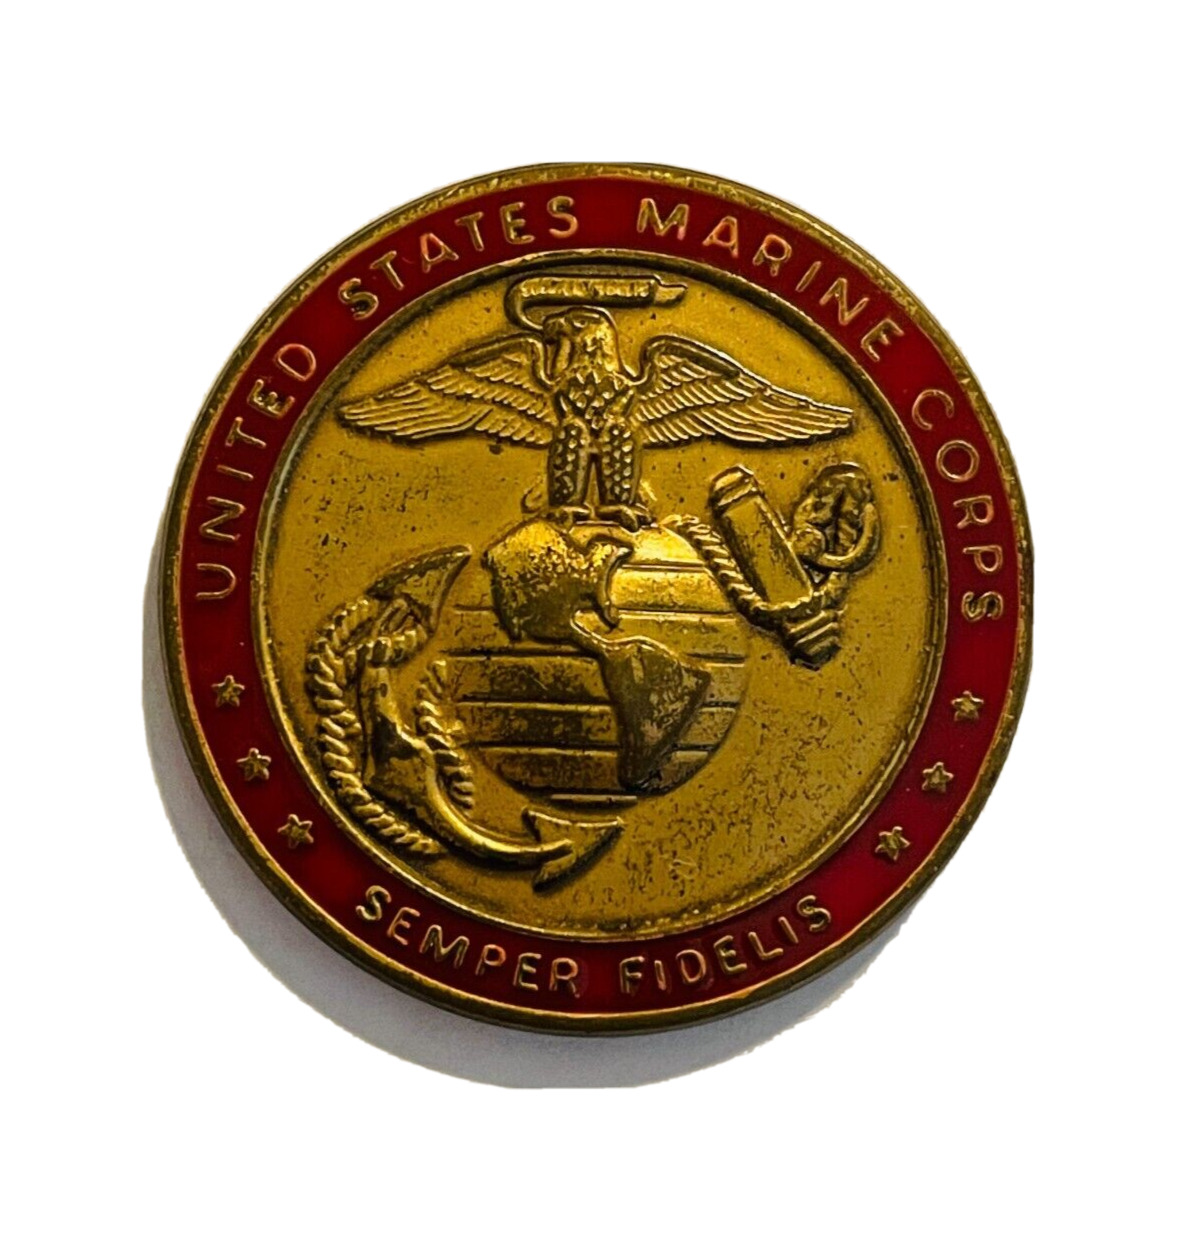 Original Uncommon Valor was a Common Virtue Marine Corp Challenge Coin